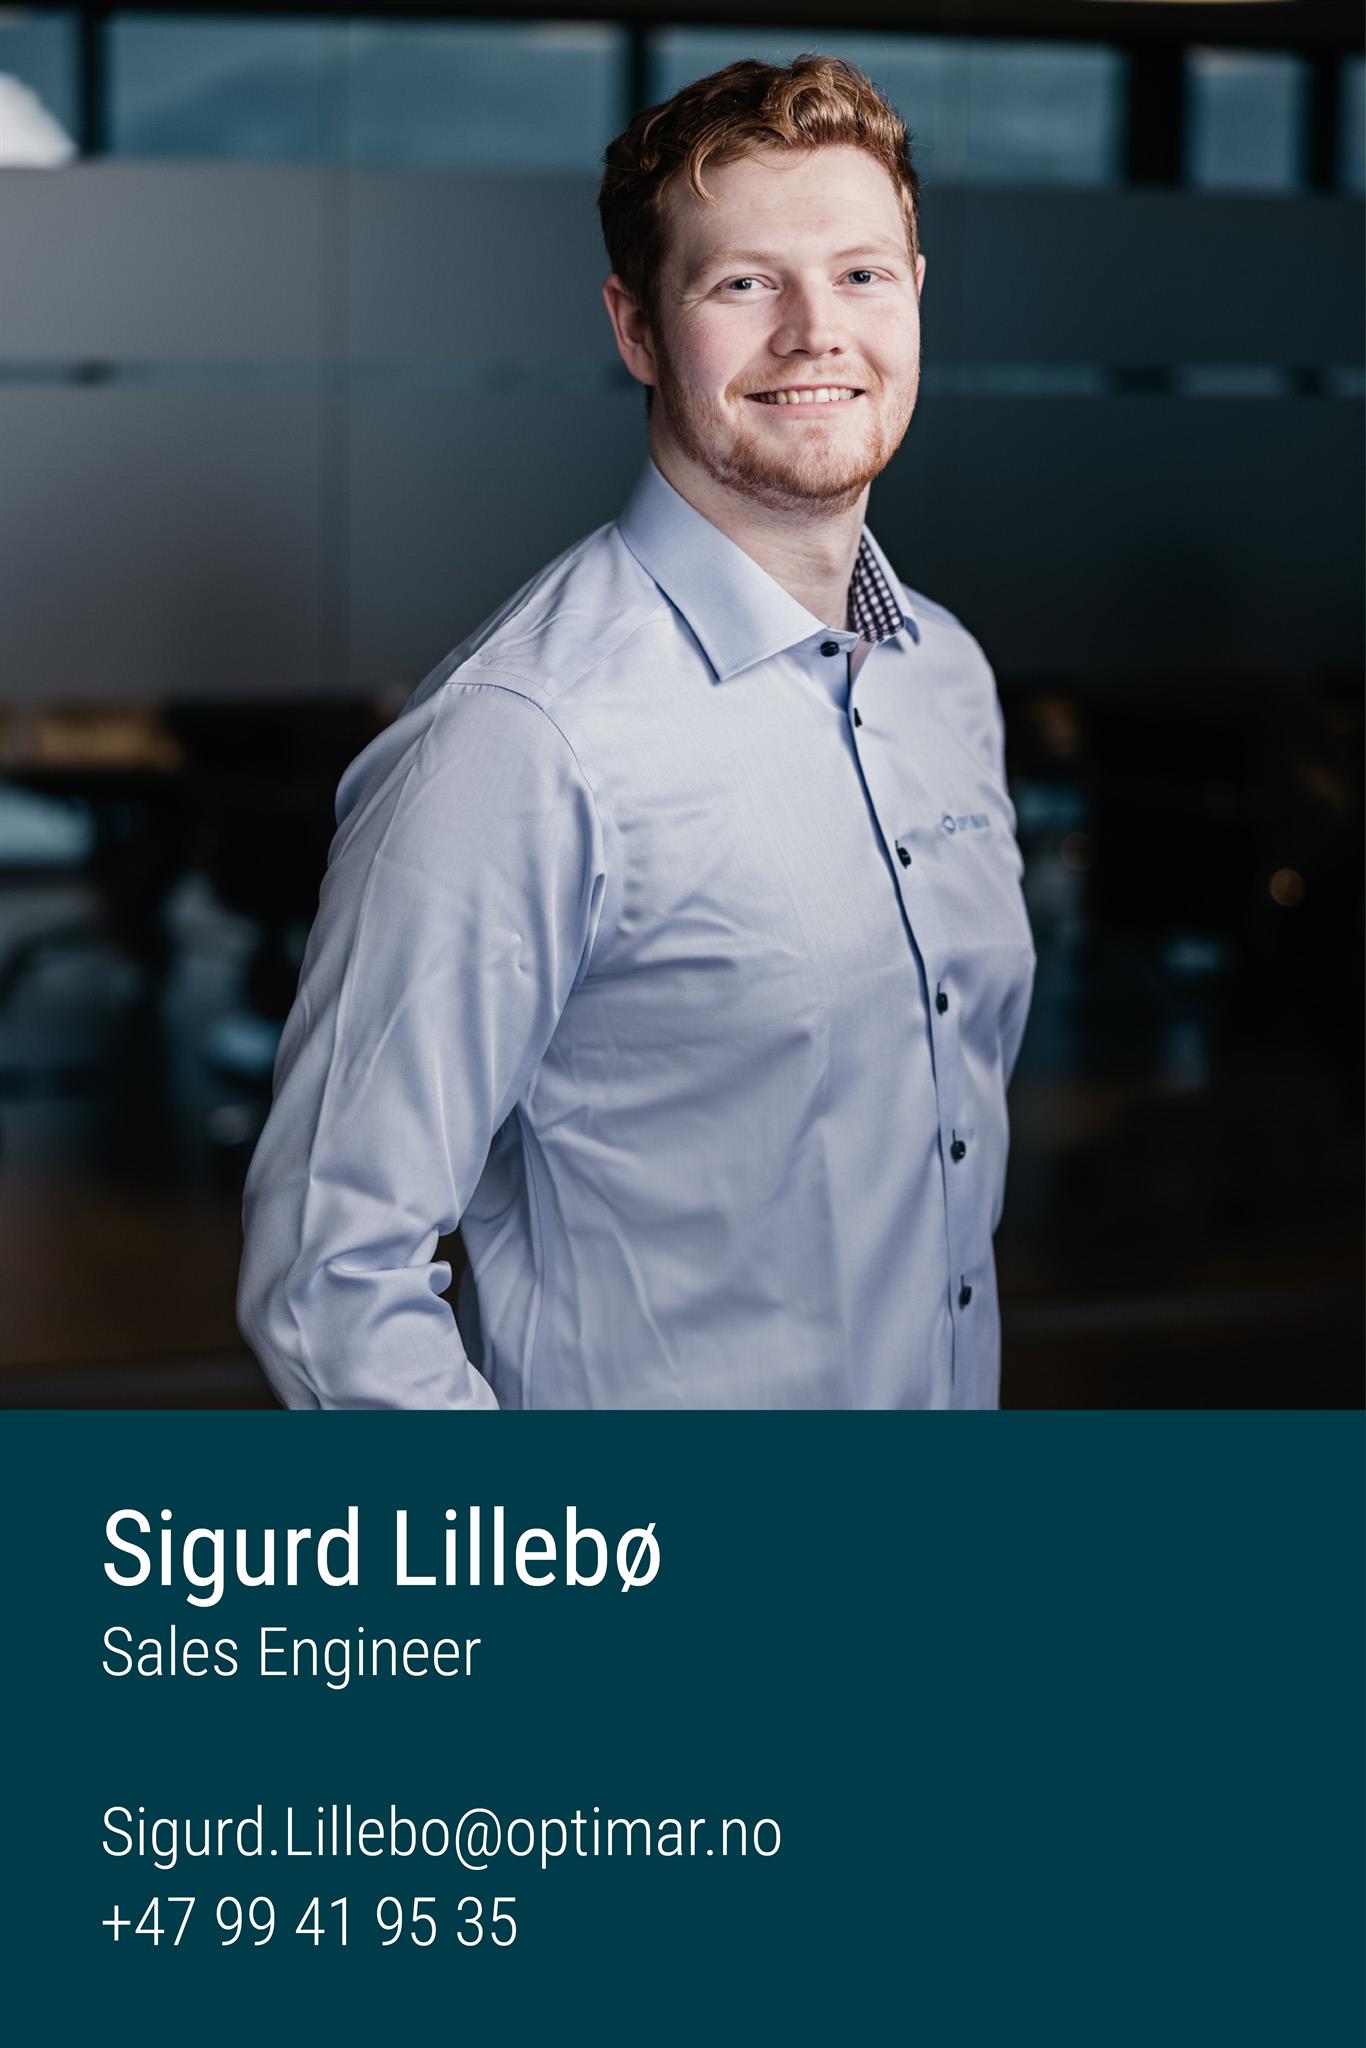 Sigurd Lillebø